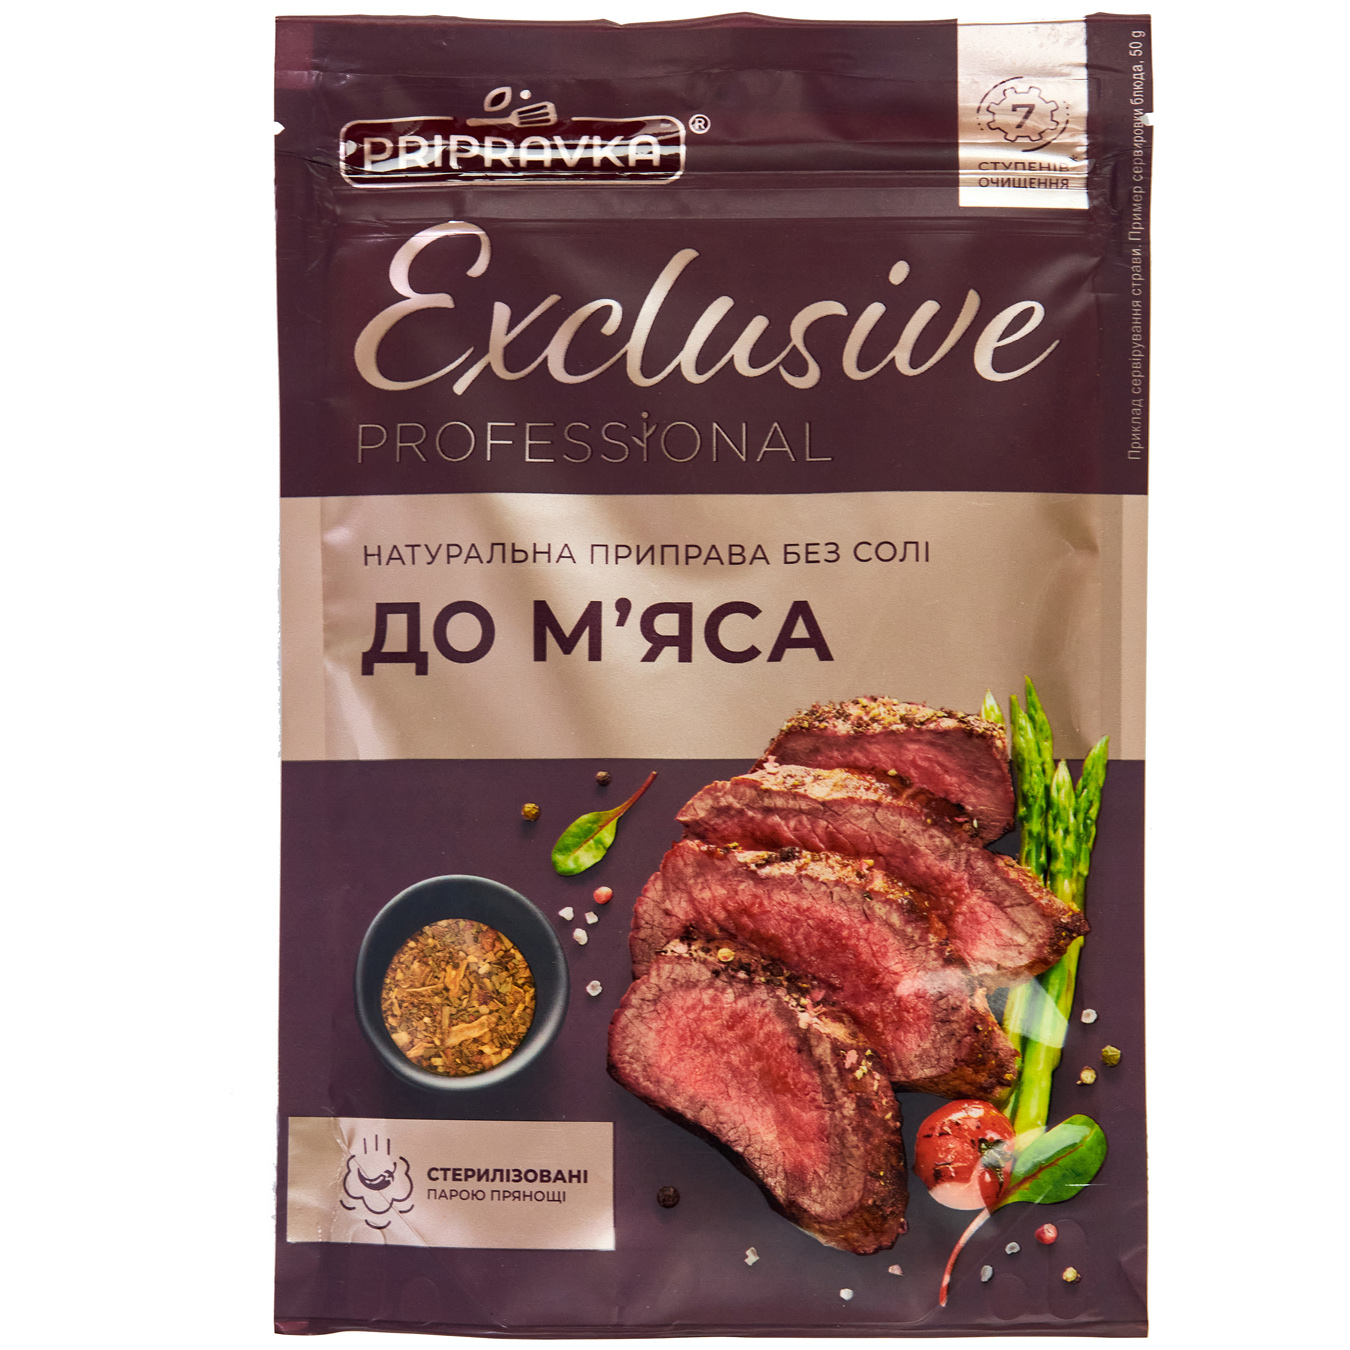 Приправа Pripravka Exclusive Professional для м'яса натуральна без солі 50г